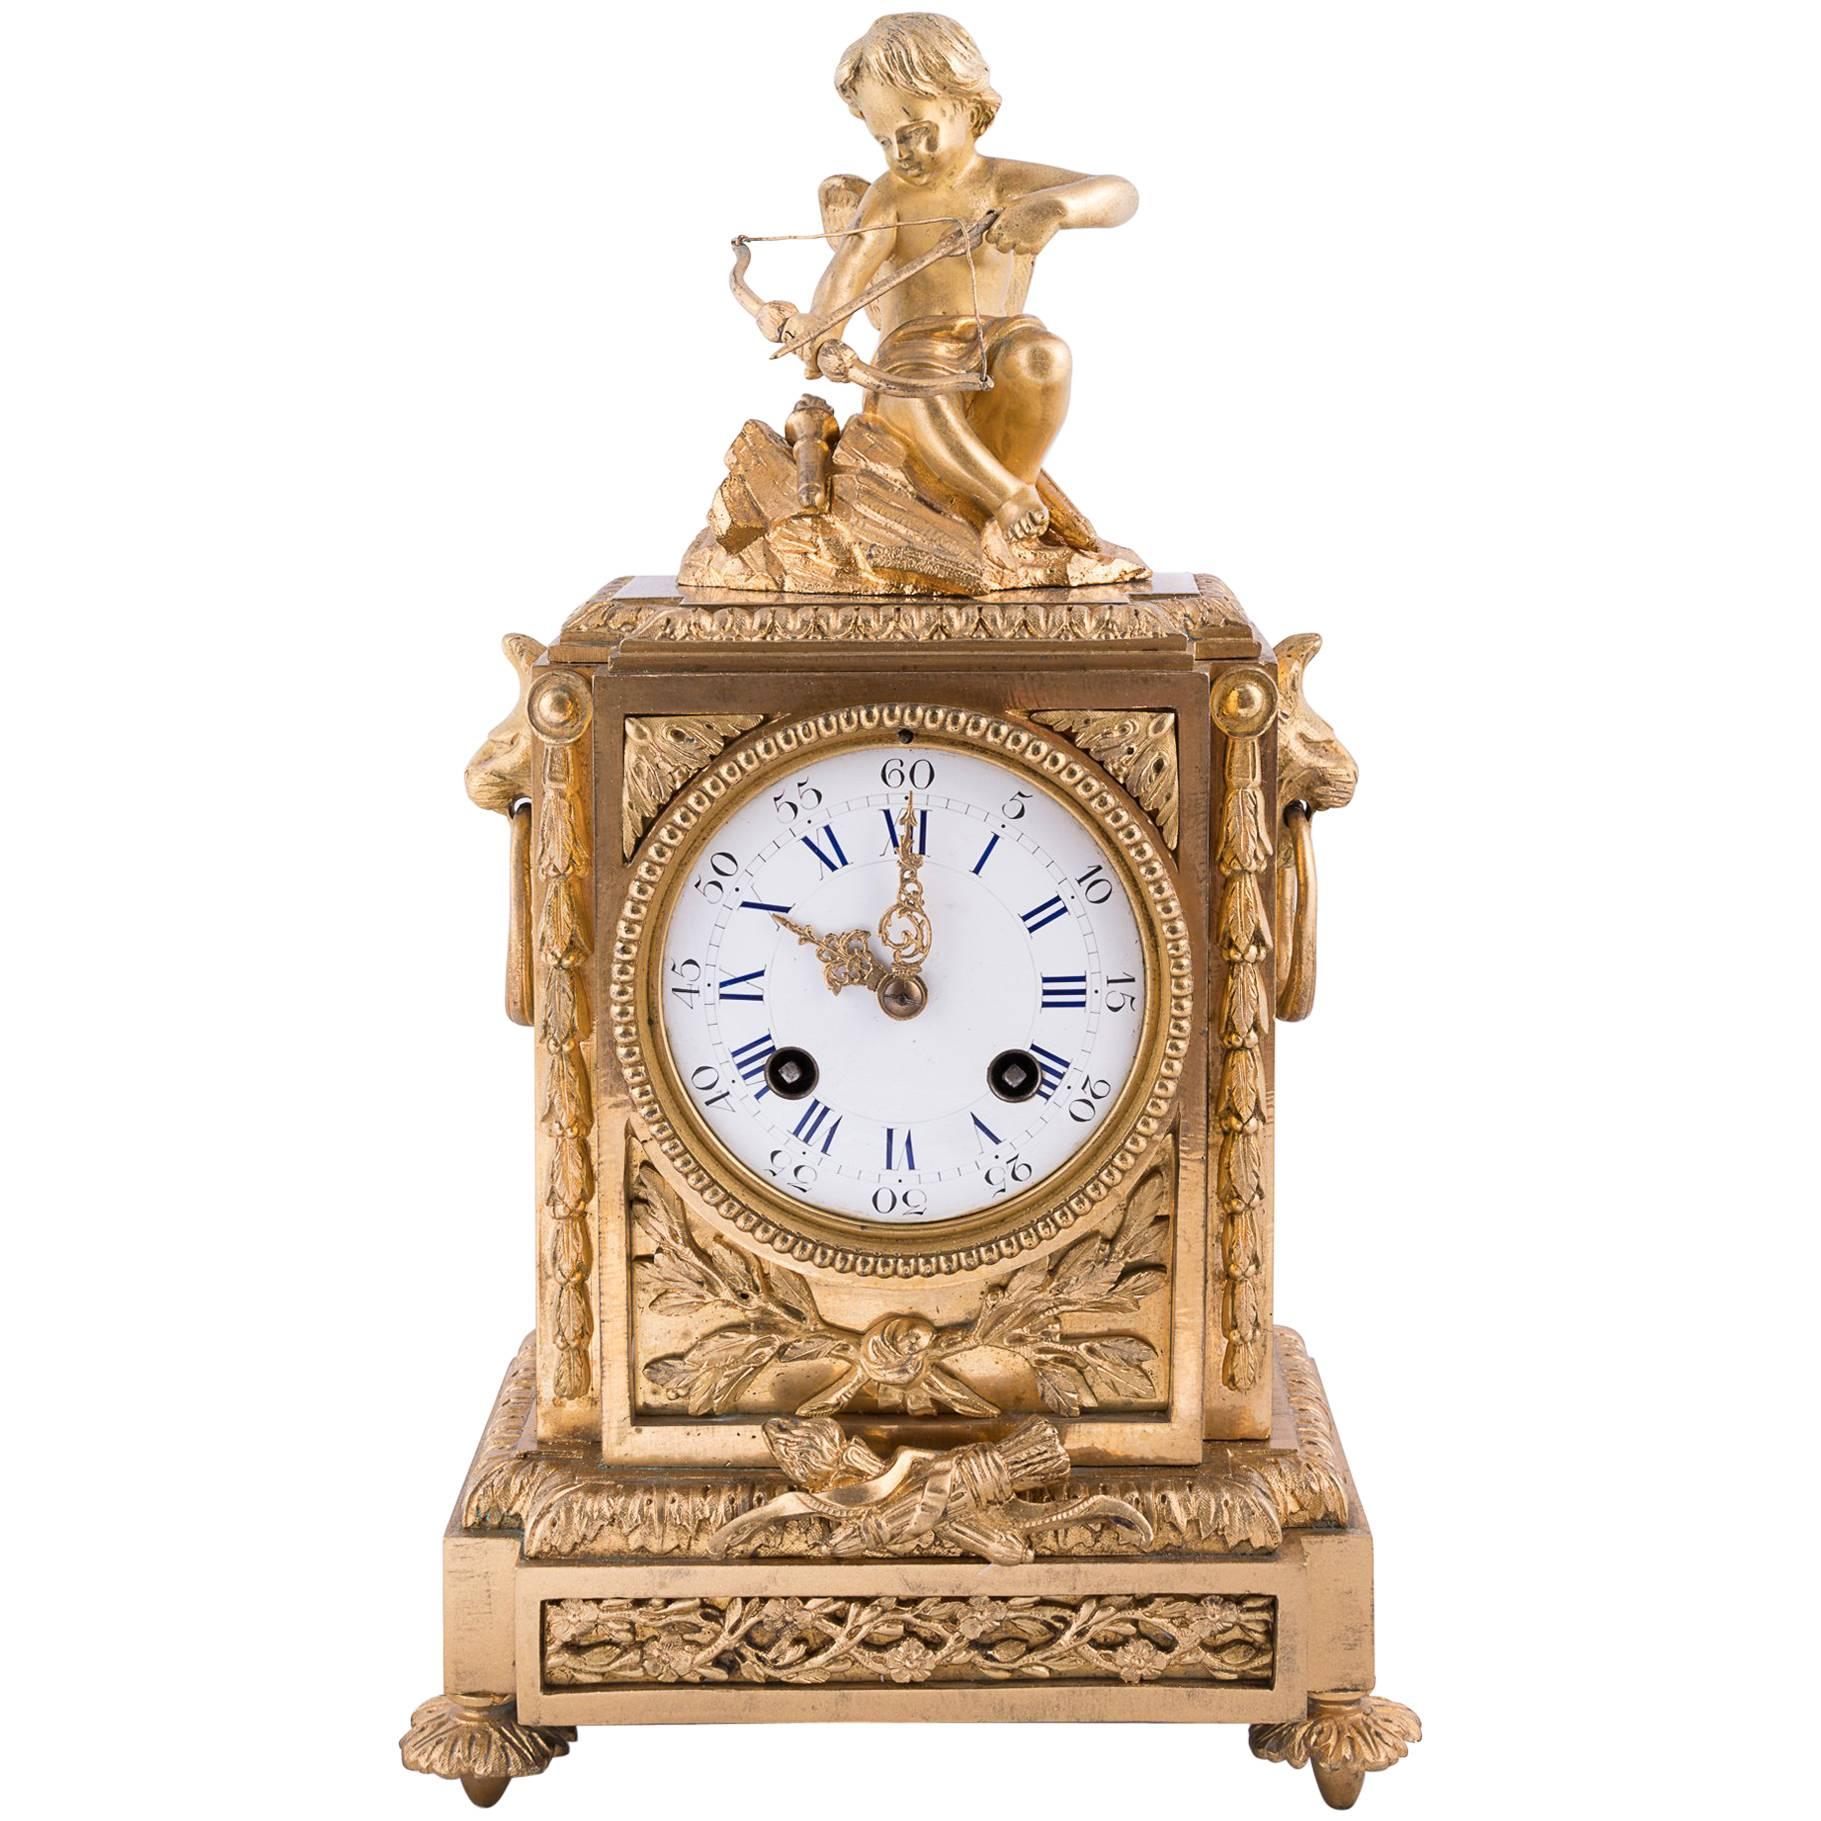 Belle horloge Napoléon III en bronze doré